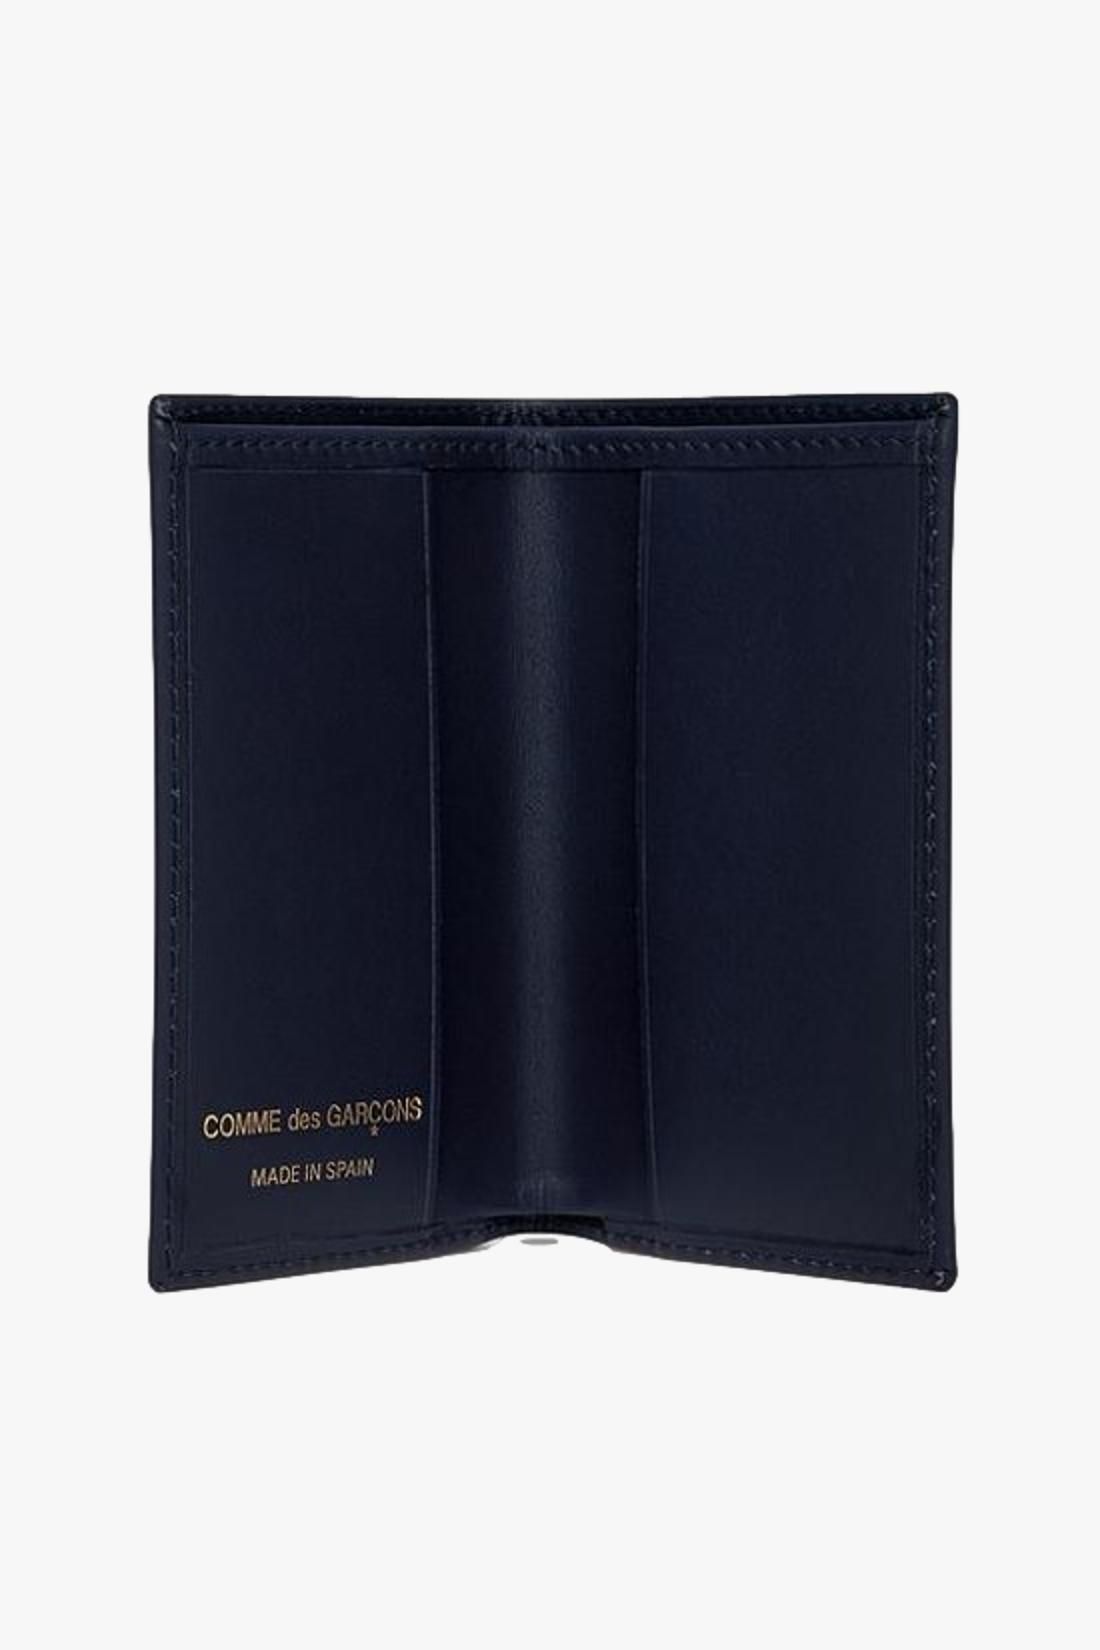 COMME DES GARÇONS WALLETS / Cdg leather wallet classic Navy